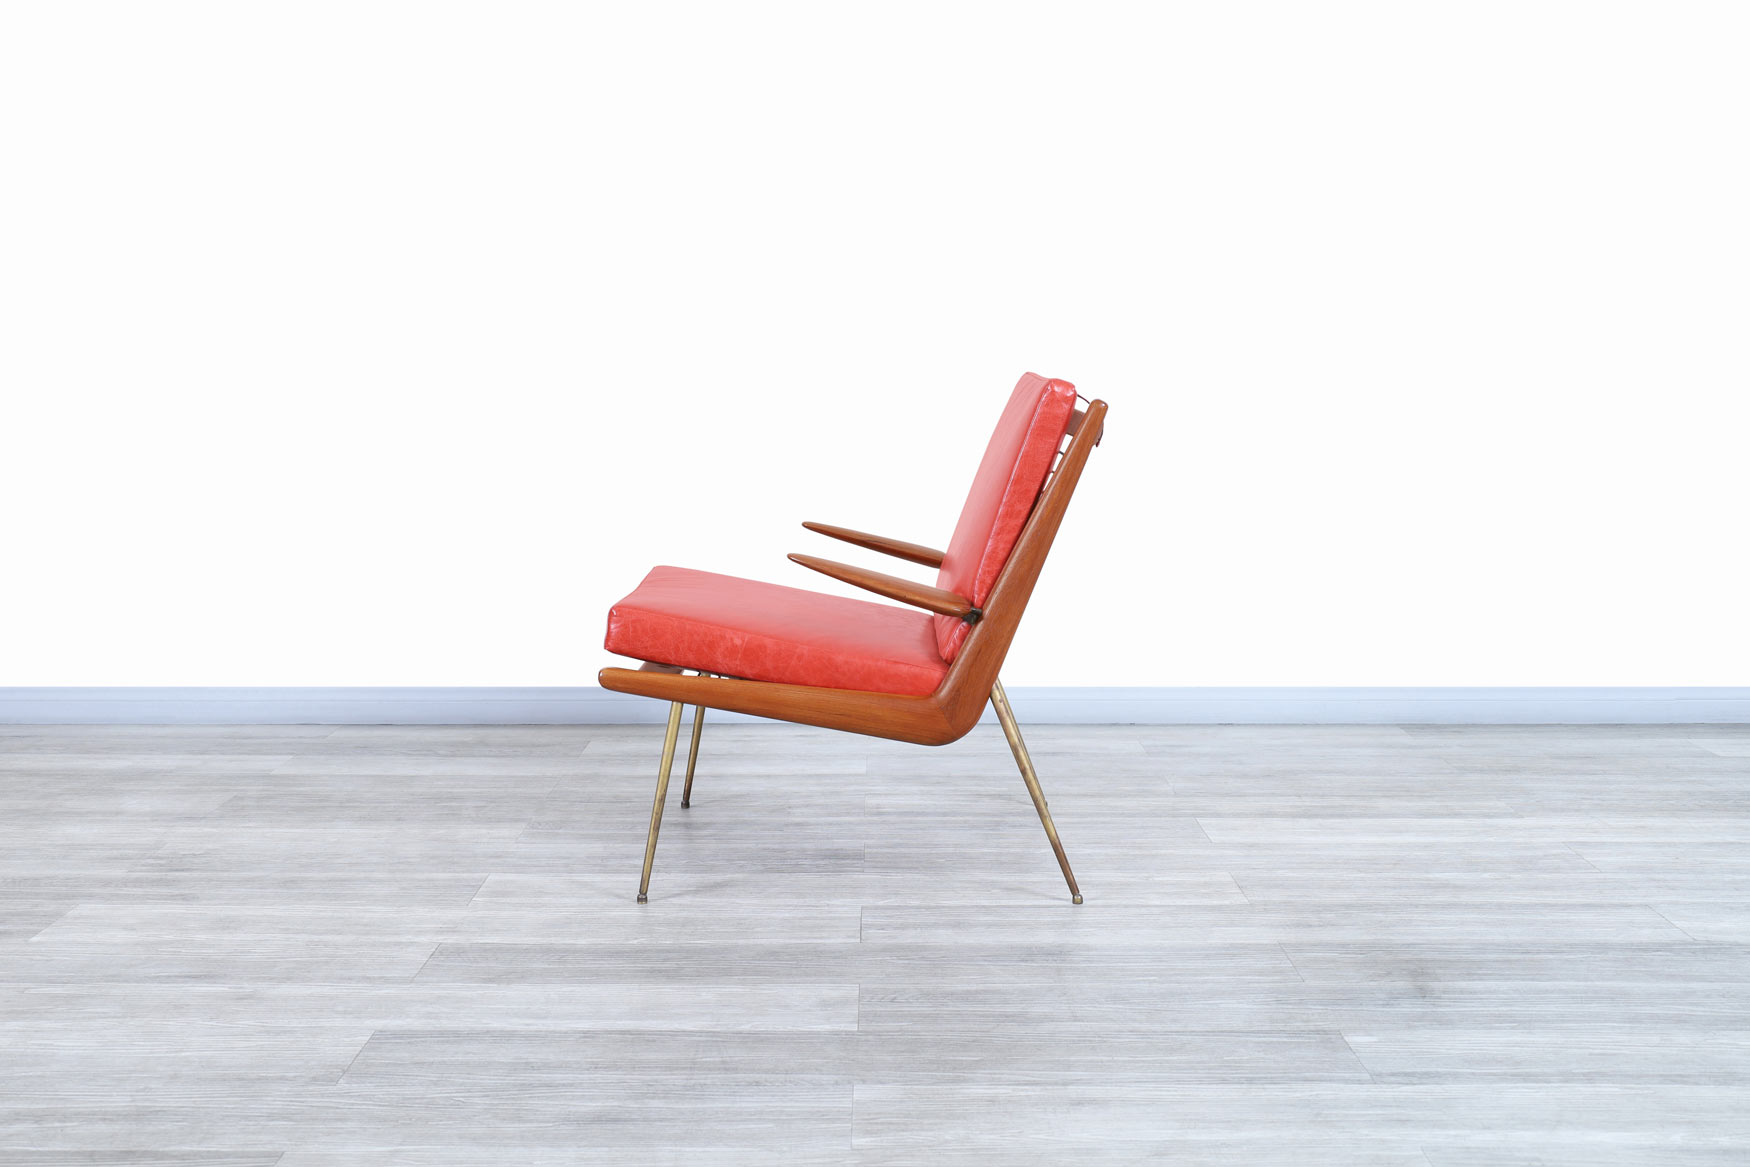 Danish Modern Boomerang Chair by Peter Hvidt and Orla Molgaard-Nielsen